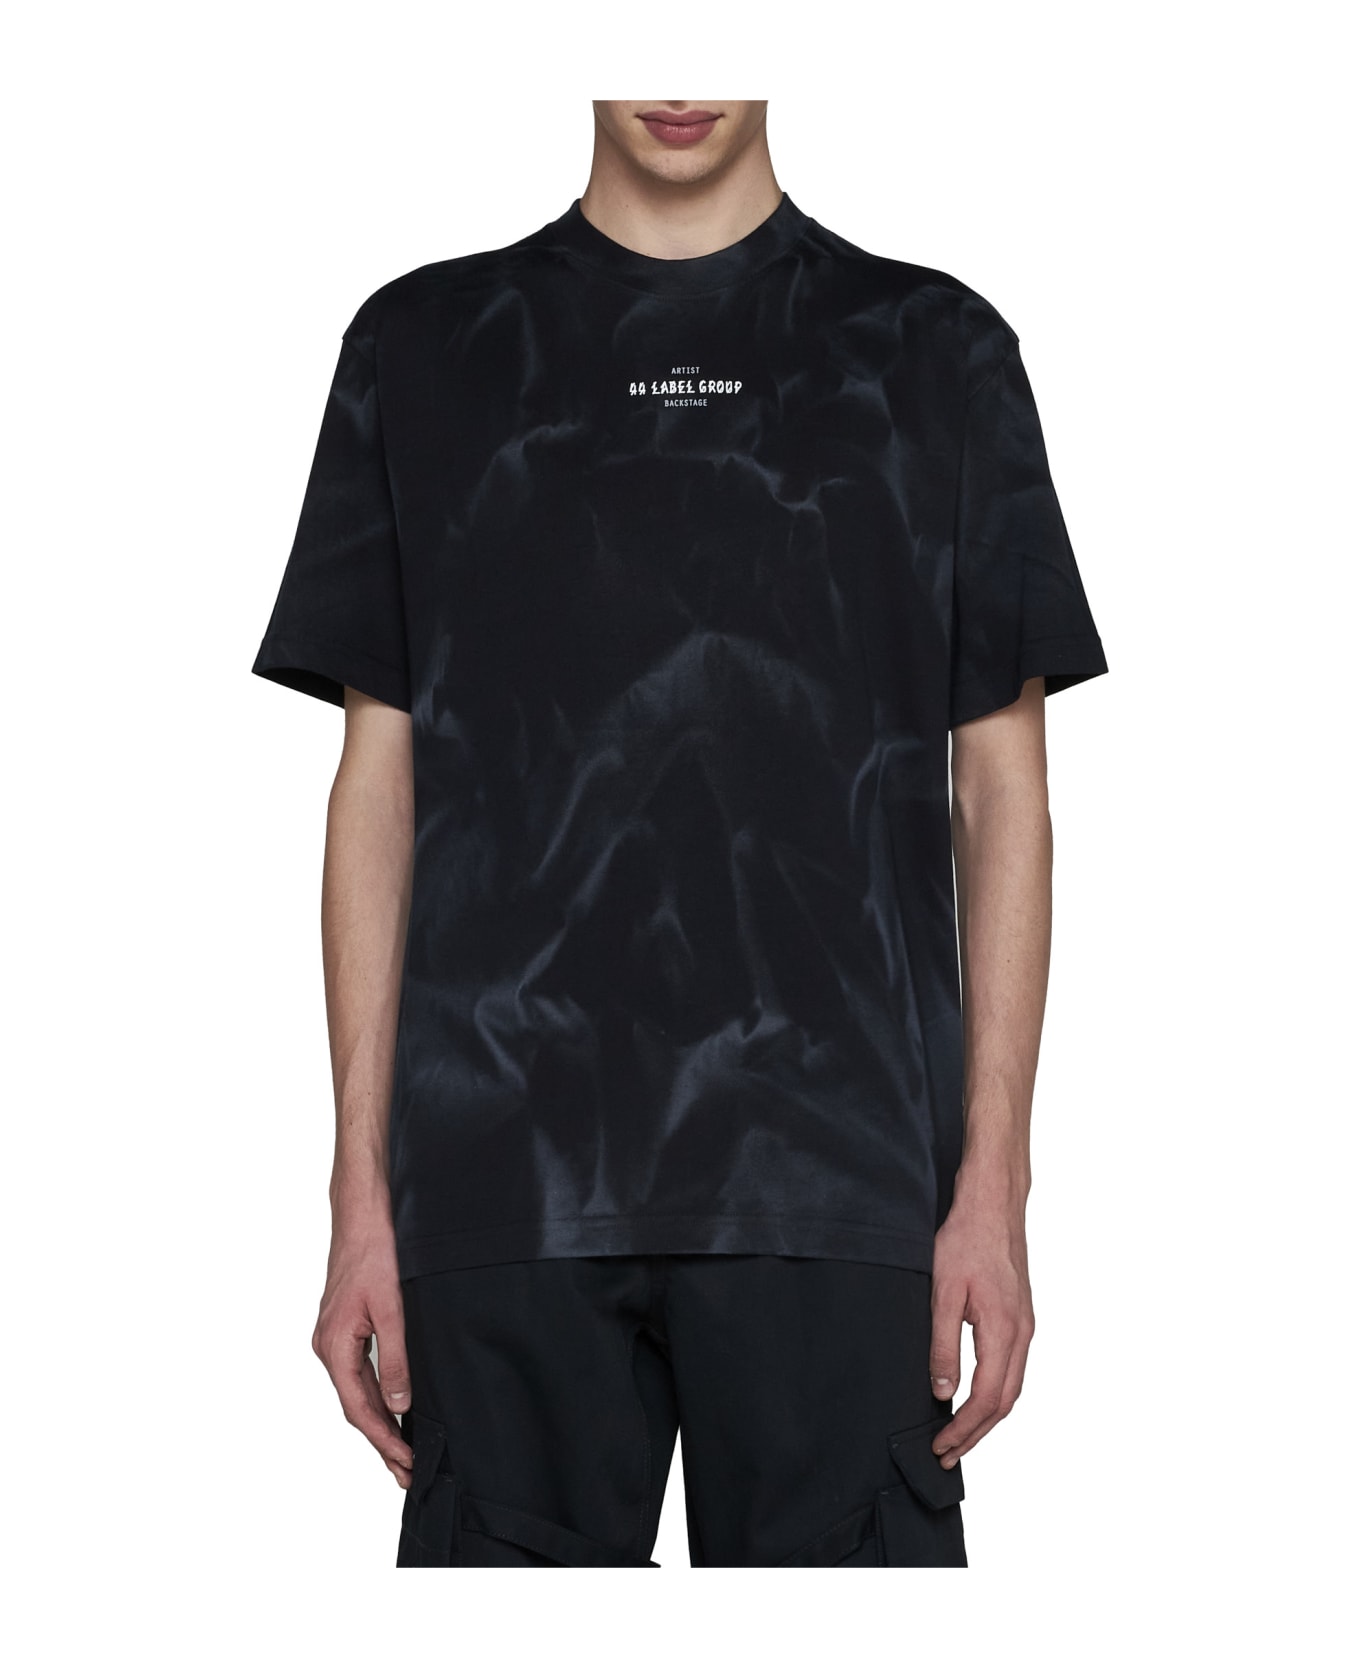 44 Label Group T-Shirt - Black+smoke effect+44 smoke